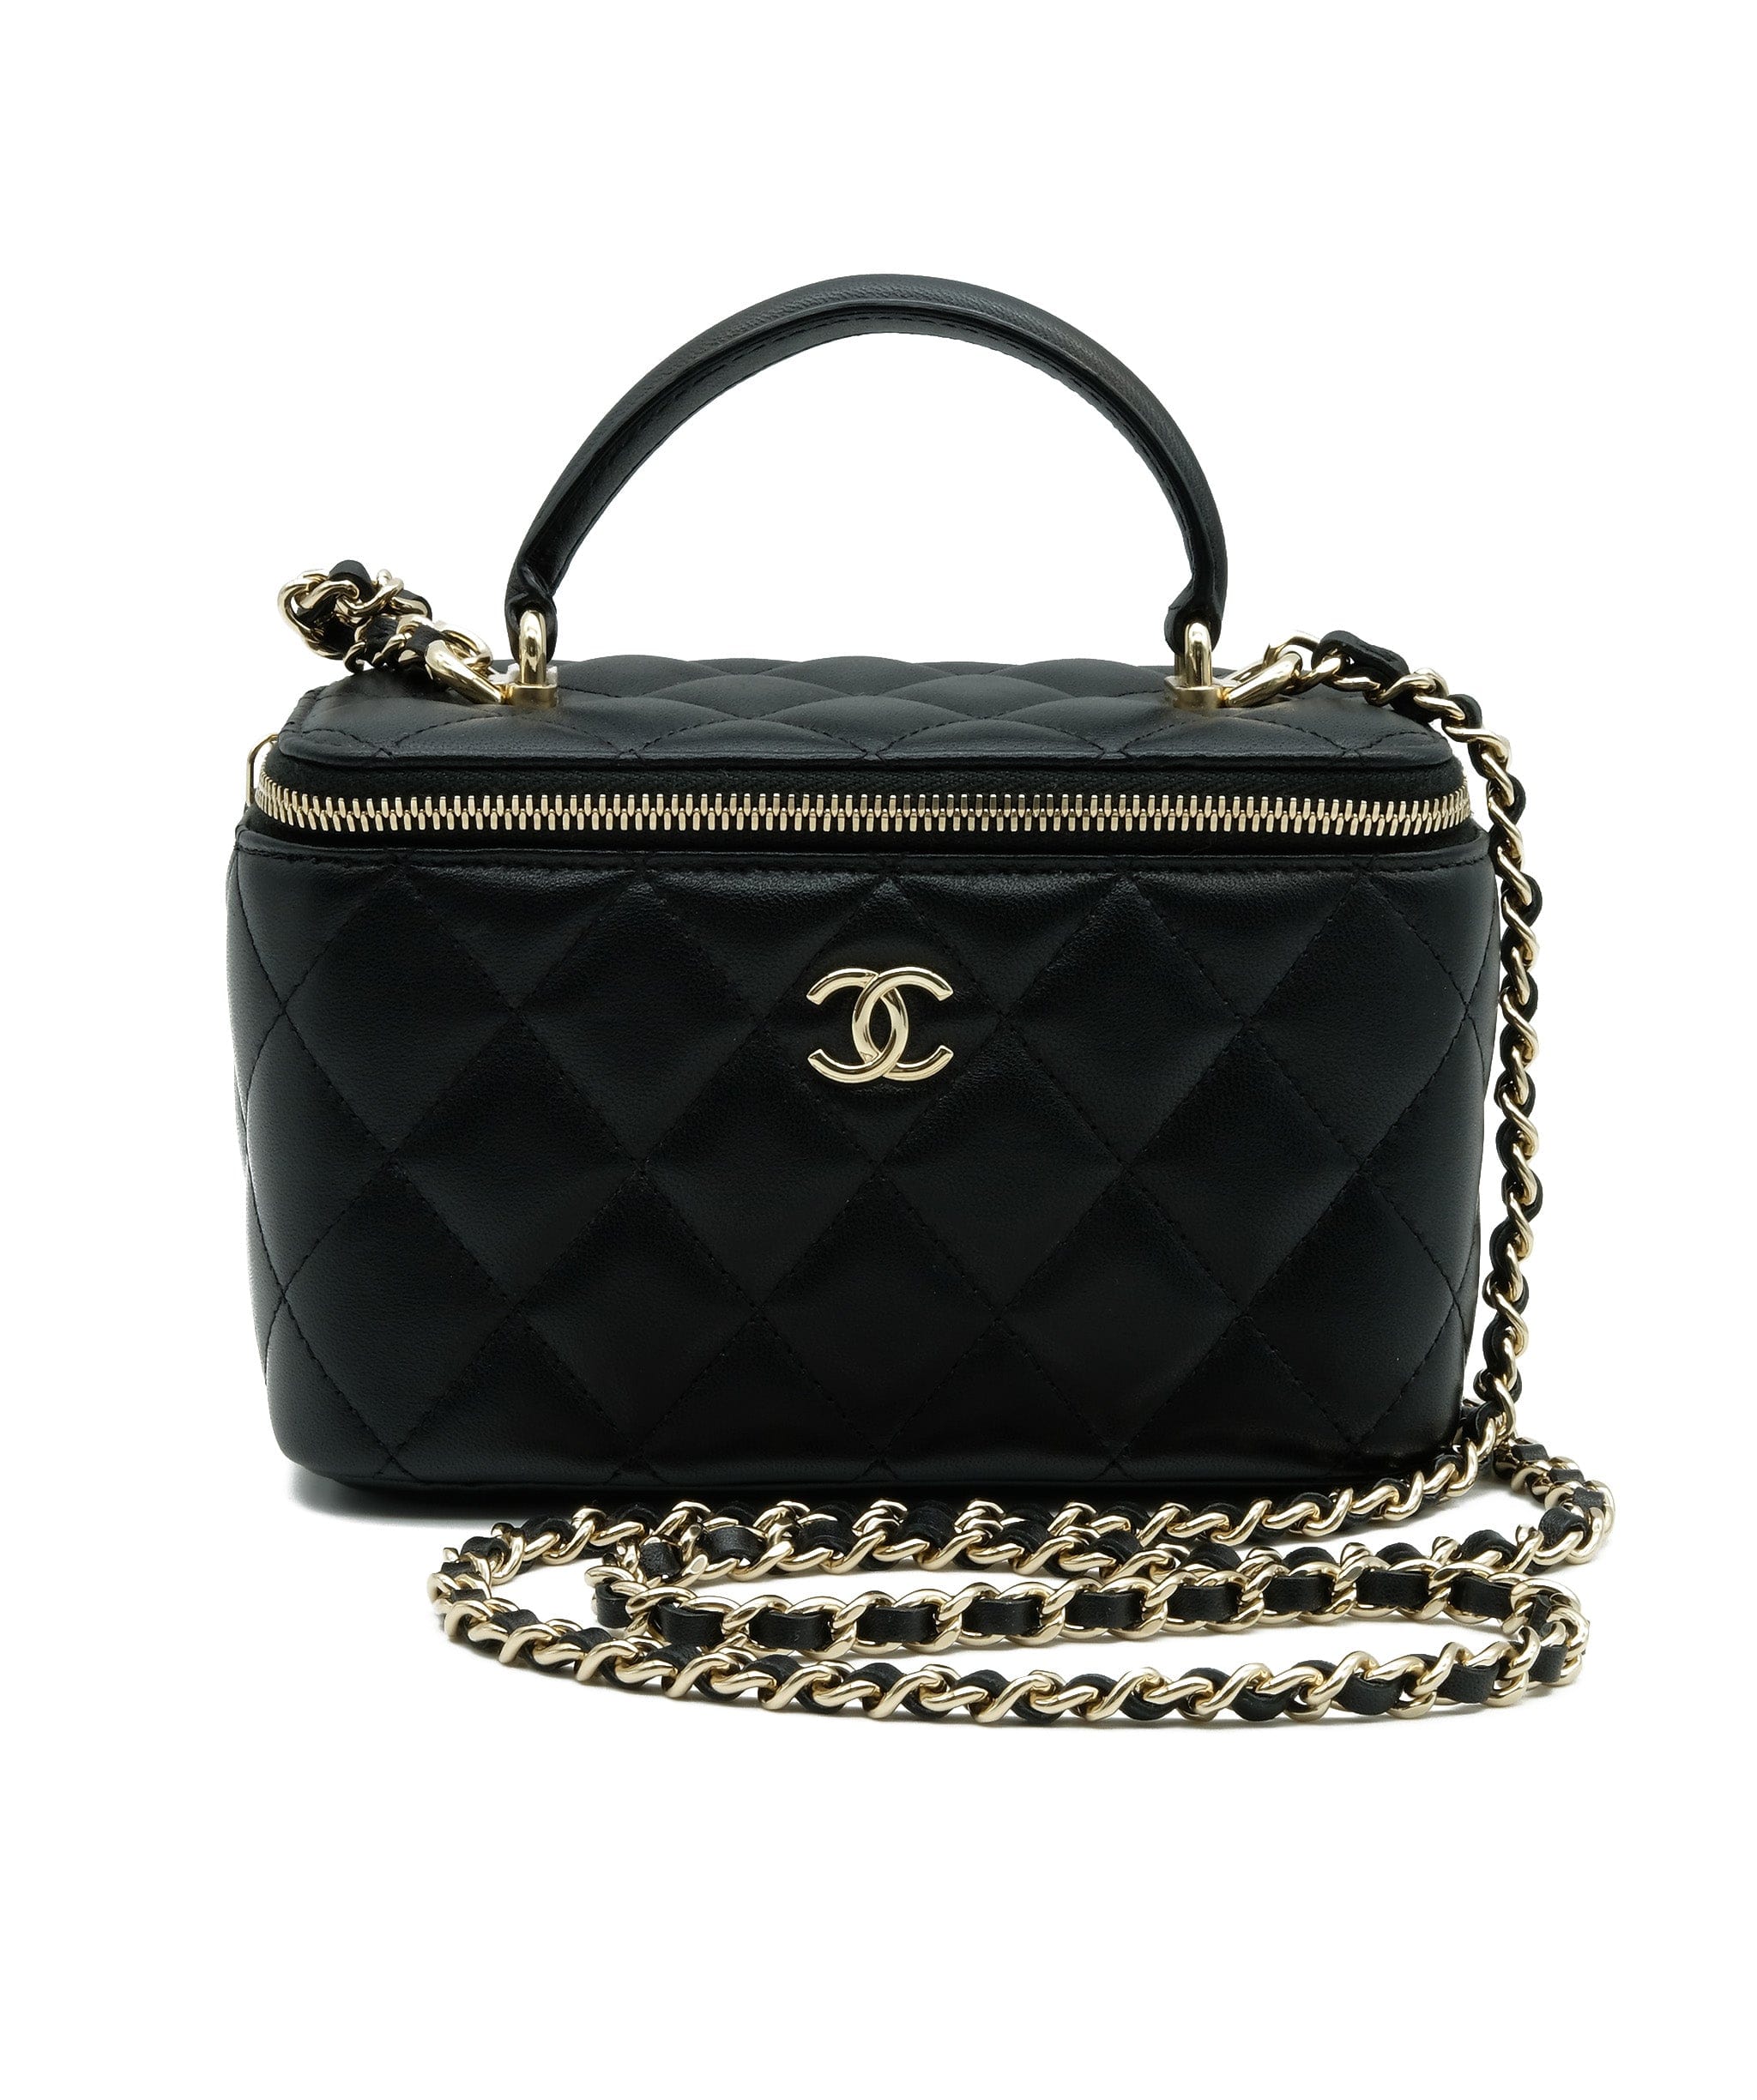 Chanel Vanity Box Black Bag RJL1755